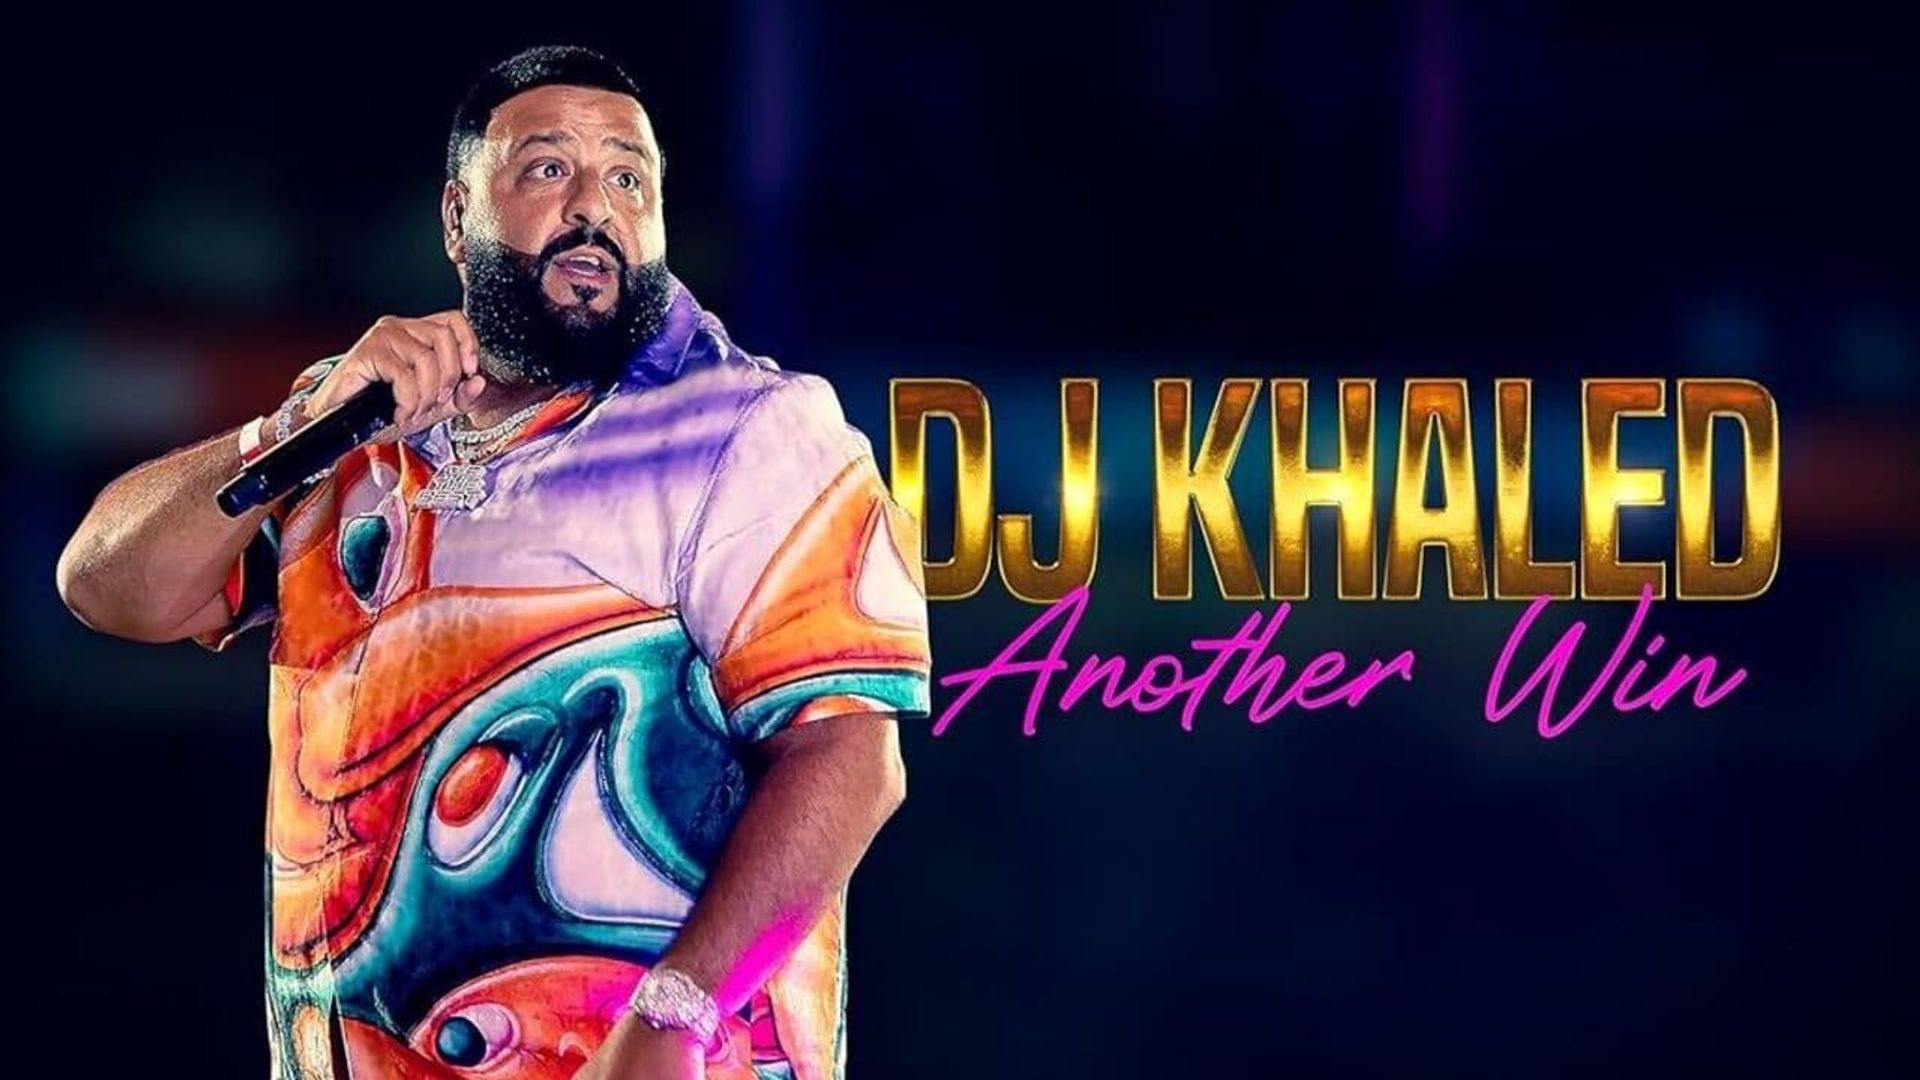 DJ Khaled: Another Win background